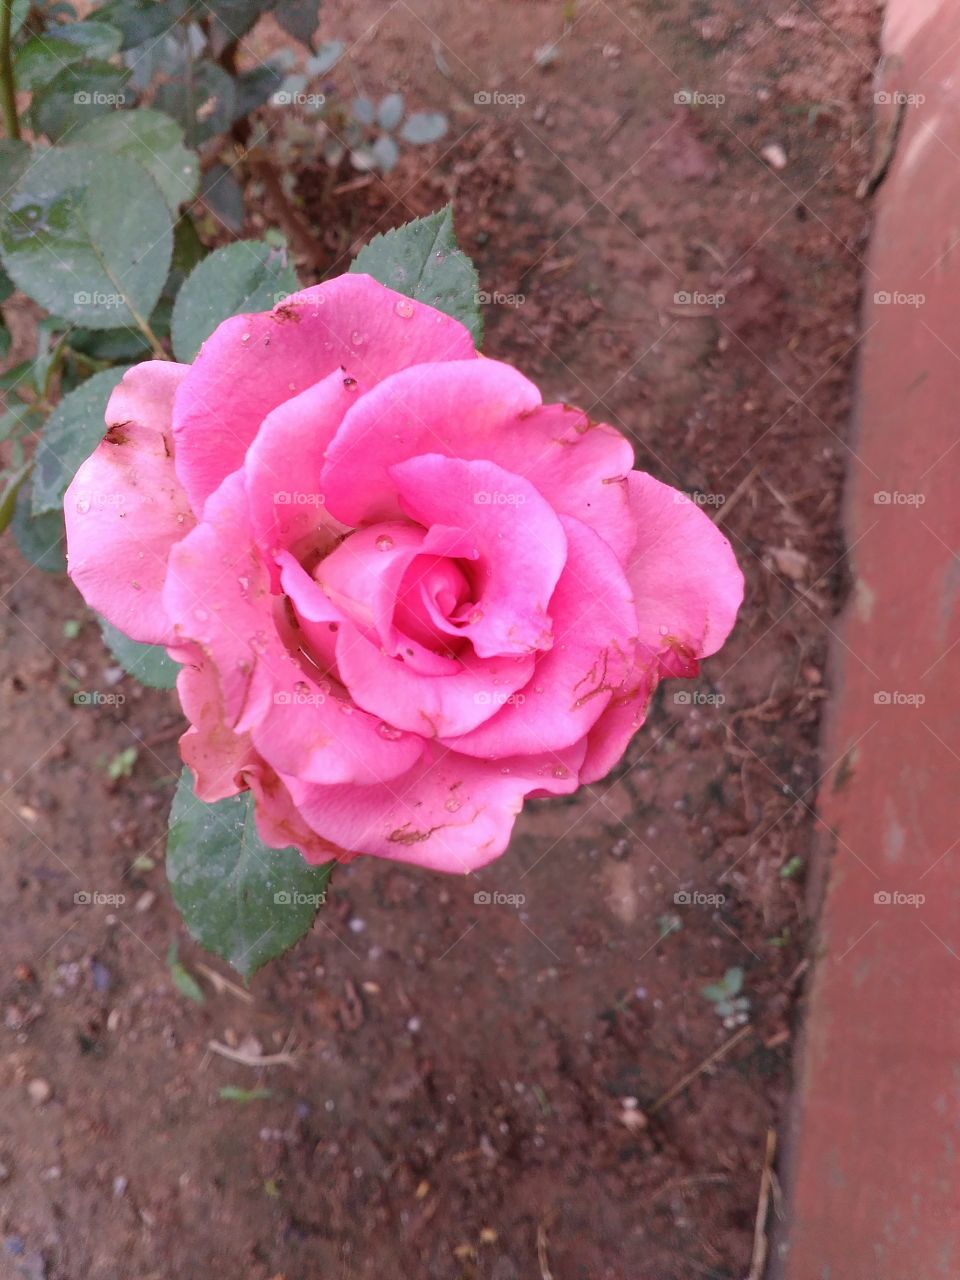 My beautiful garden
a beautiful pink rose